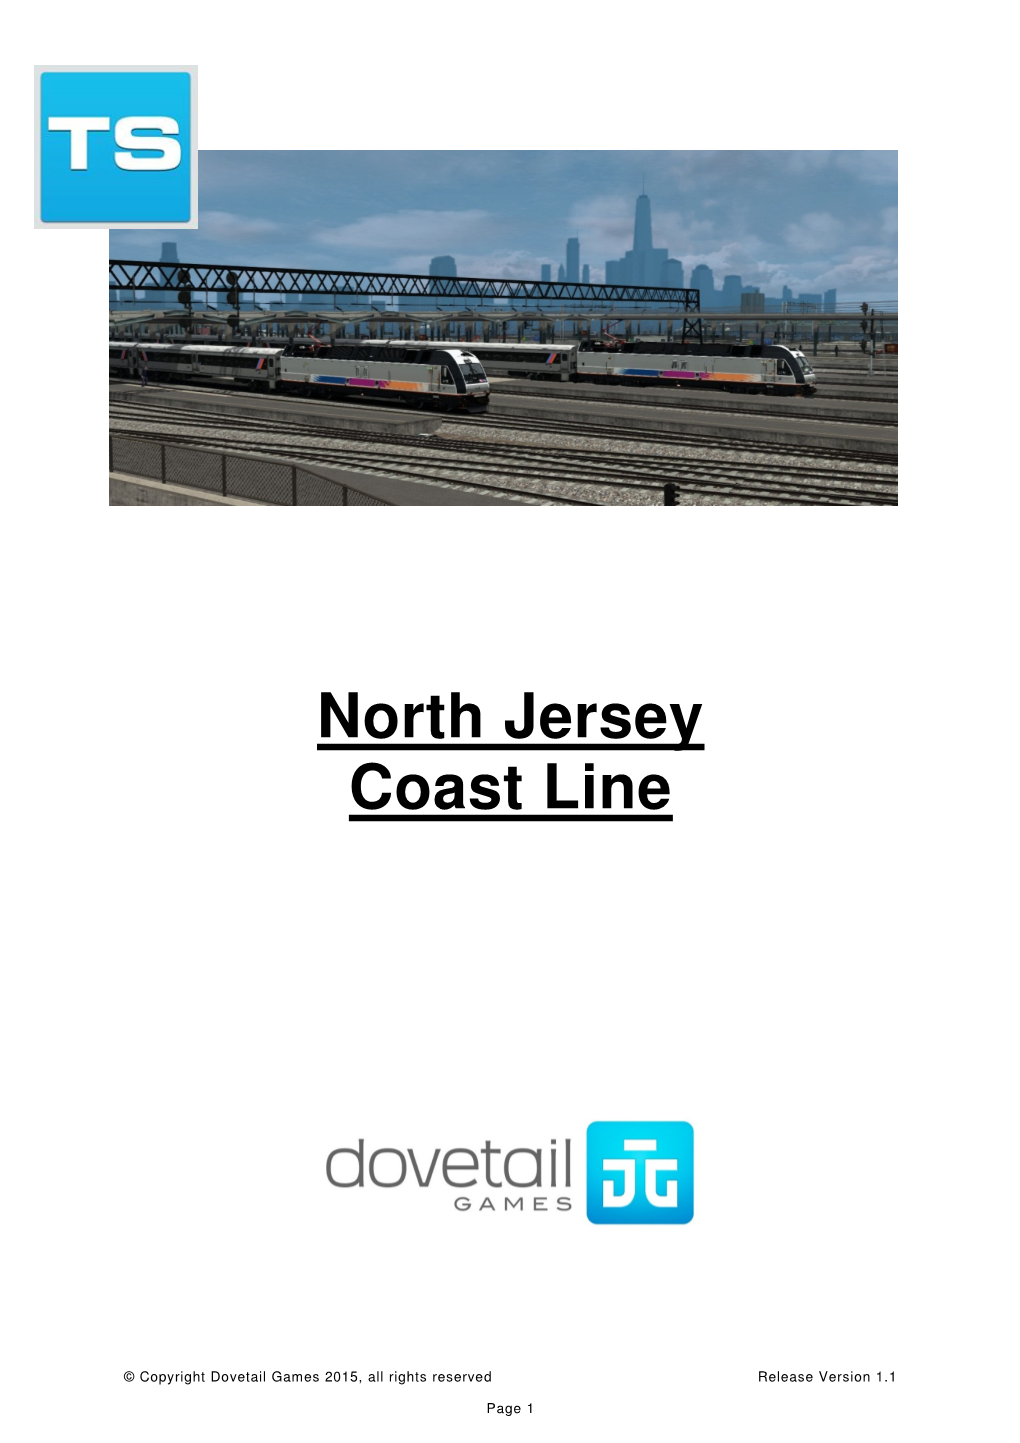 North Jersey Coast Line